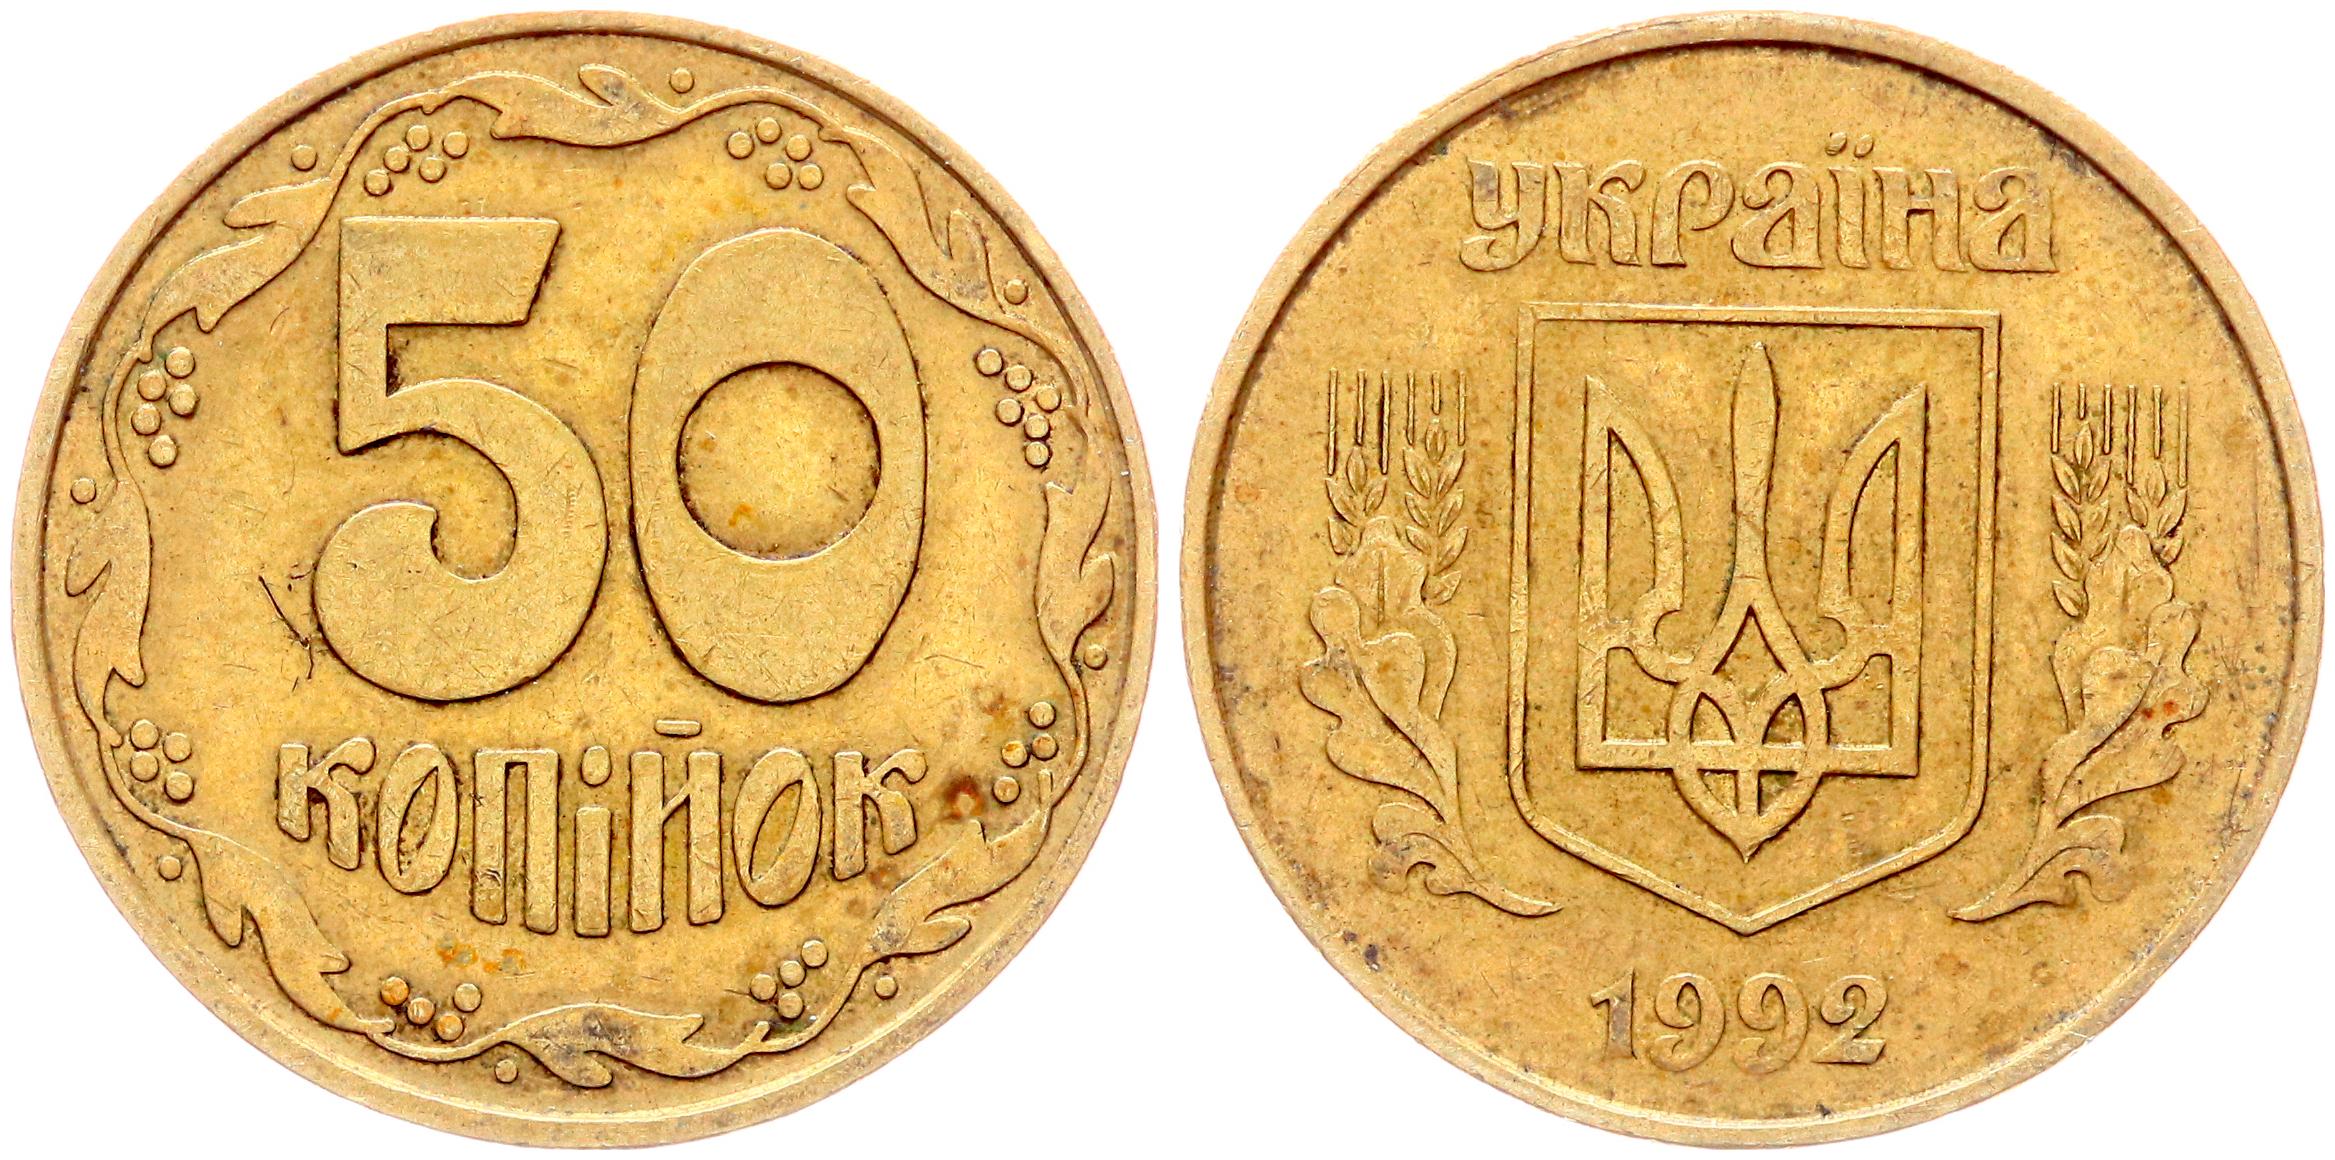 50 25 копеек. 25 Копеек 1992 Украина. Украина монета 10 копеек 1992. Монета 25 копеек 1992 Украина. 25 Копеек 1992.